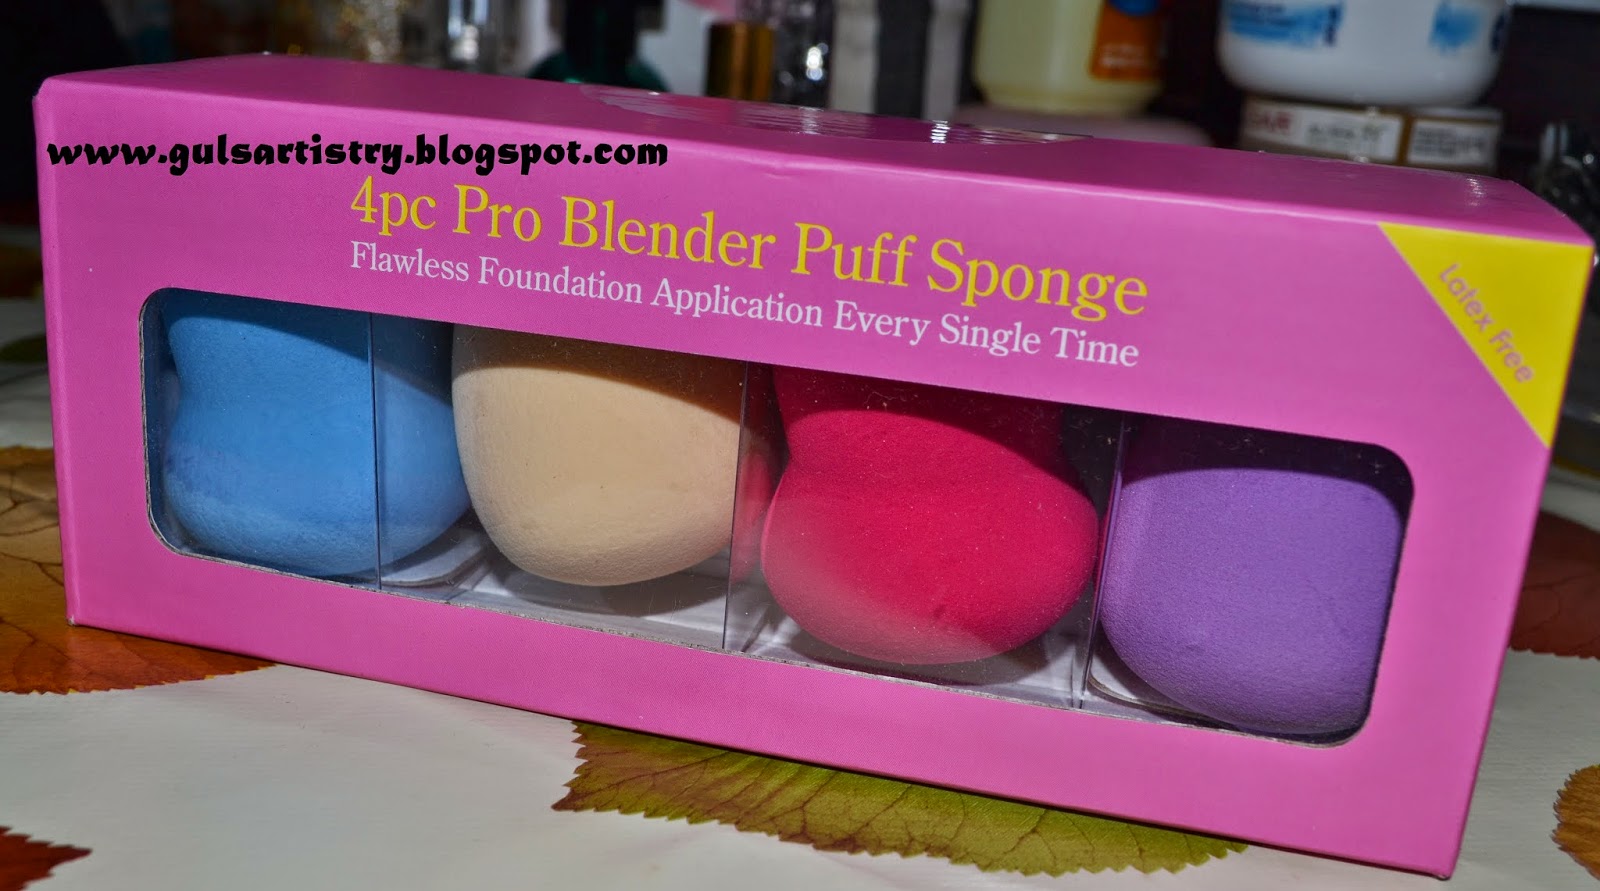 How to use a makeup sponge jobs